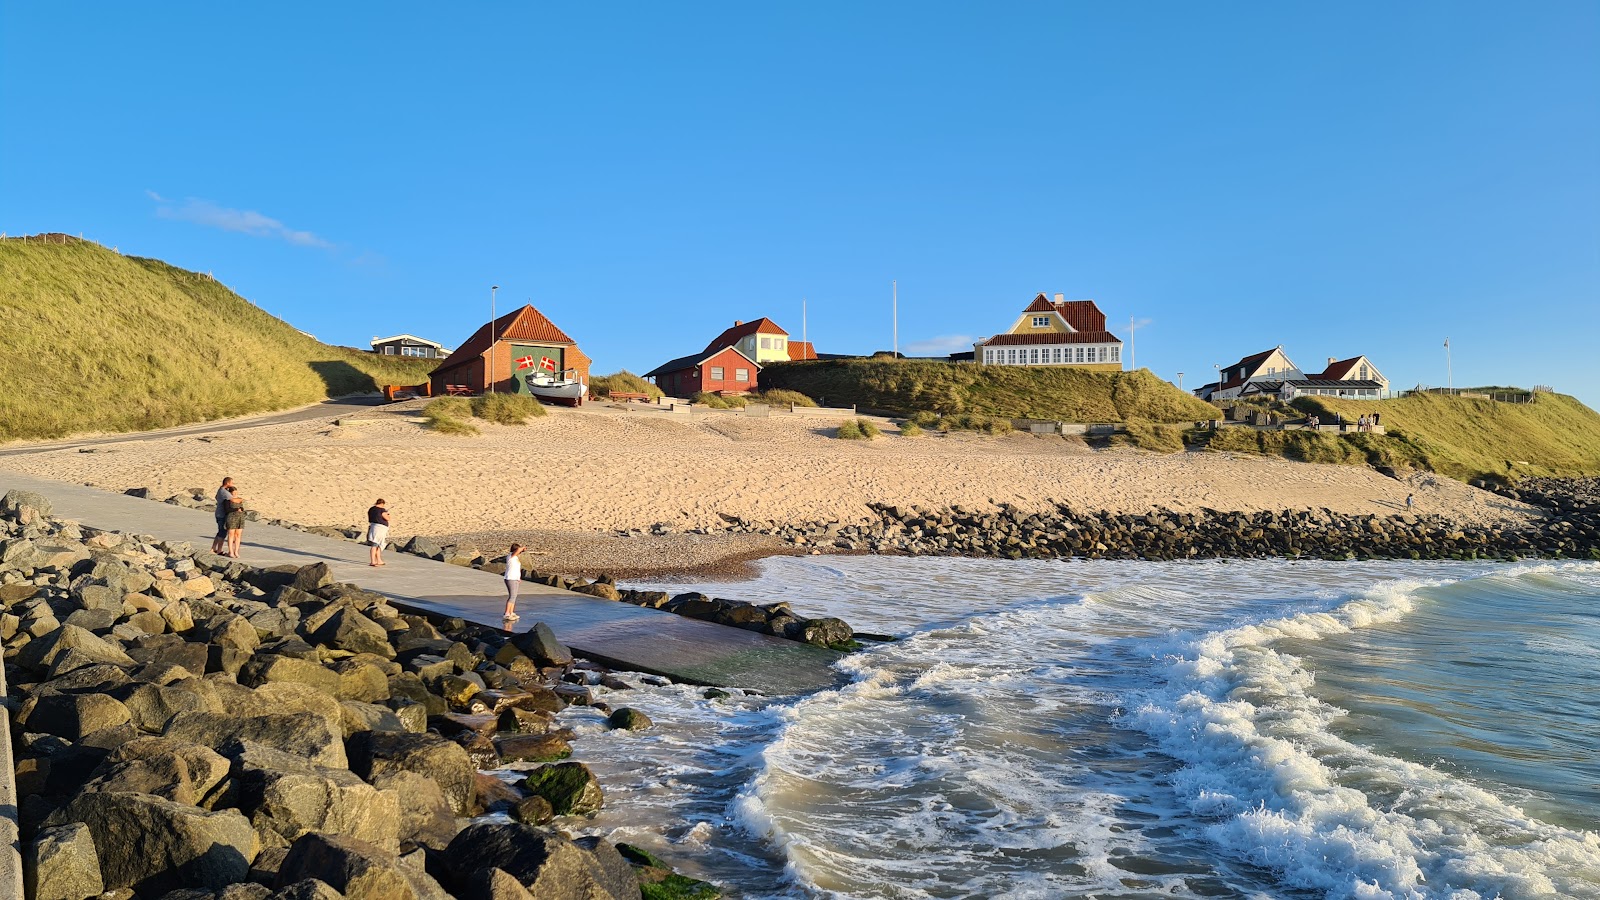 Lonstrup Klint Beach'in fotoğrafı geniş plaj ile birlikte